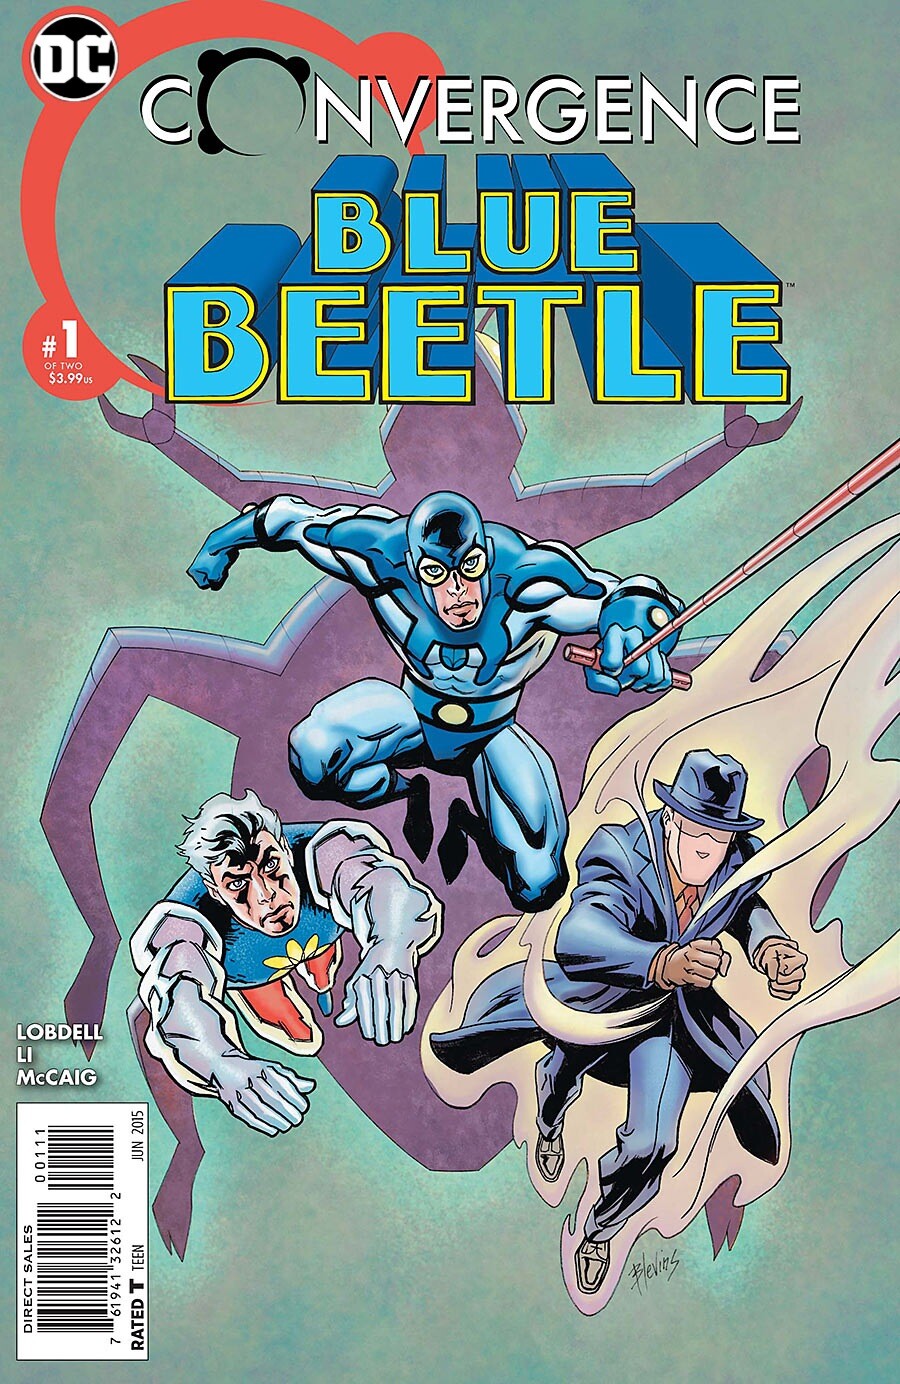 DC Showcase: The Blue Beetle